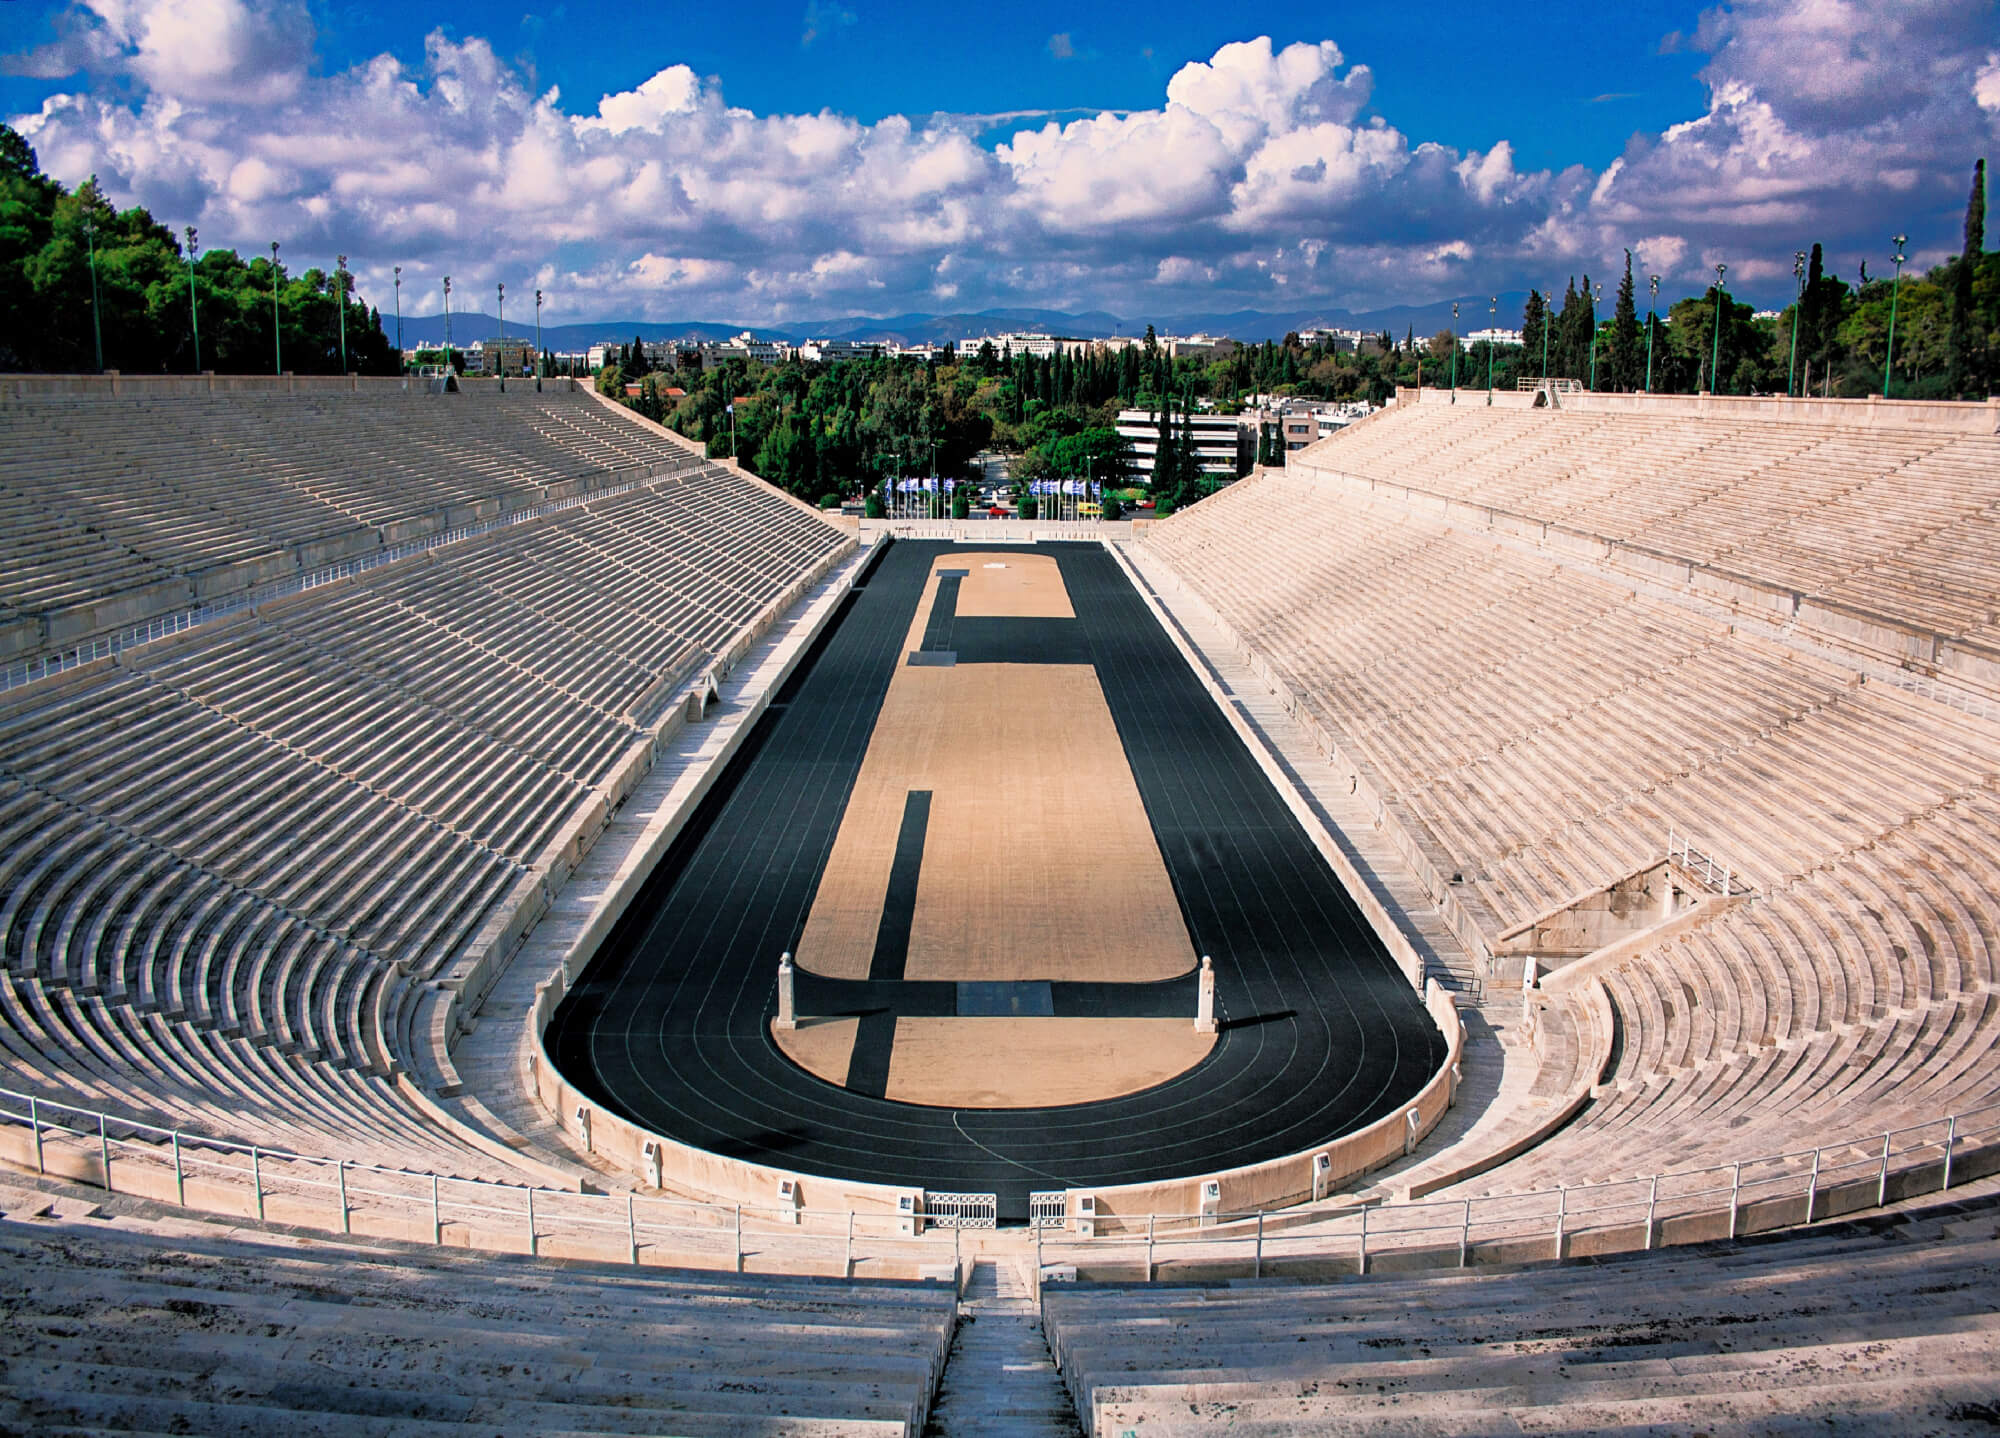 Panathenaic Stadium deserves a look while seeing Athens in 3 days.